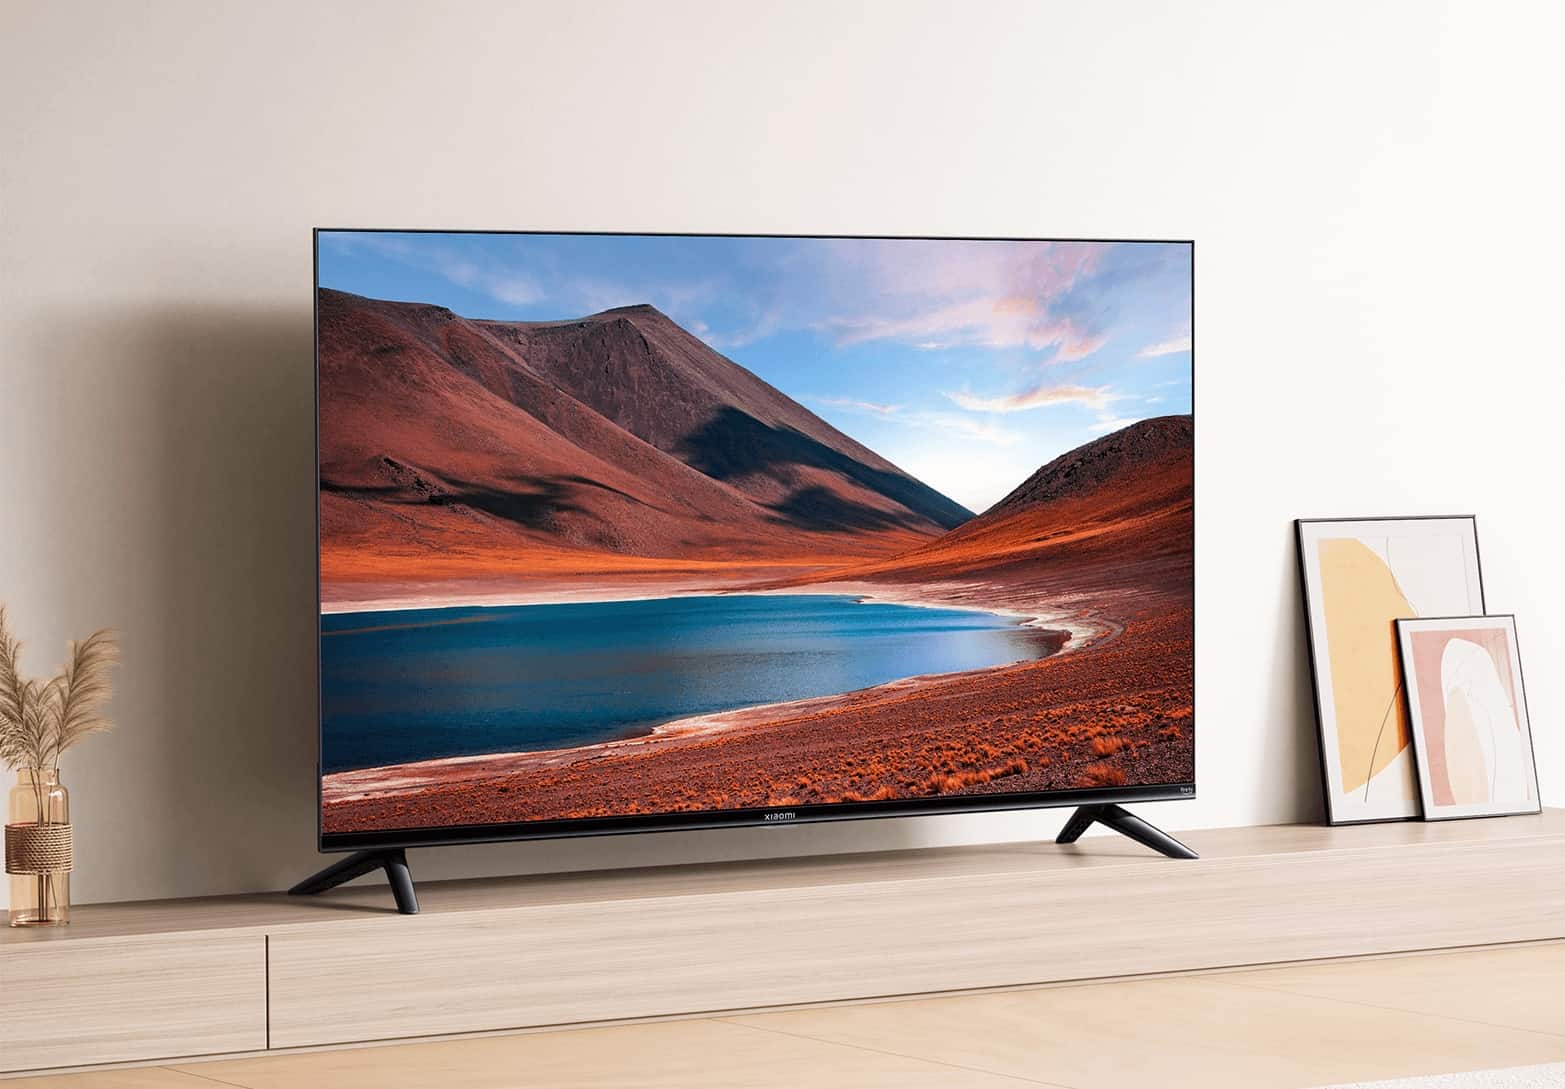 Xiaomi apresenta sua nova TV com sistema operacional da Amazon